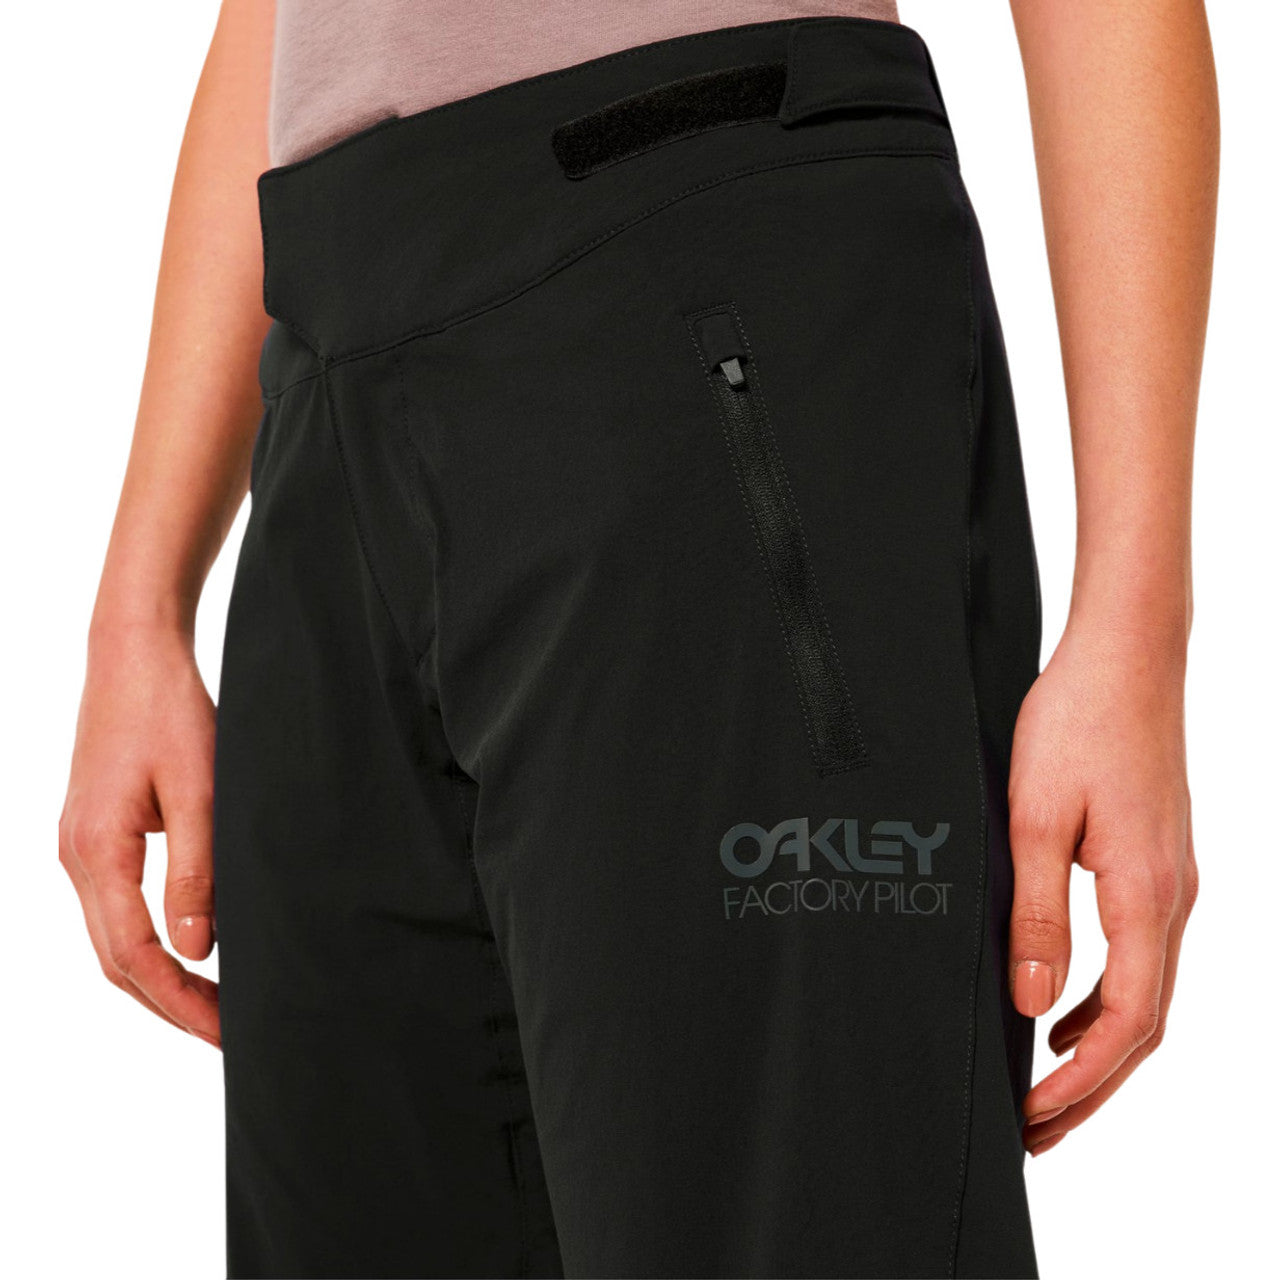 Oakley Women's Factory Pilot Lite Shell Shorts - Women's XL-34 - Blackout